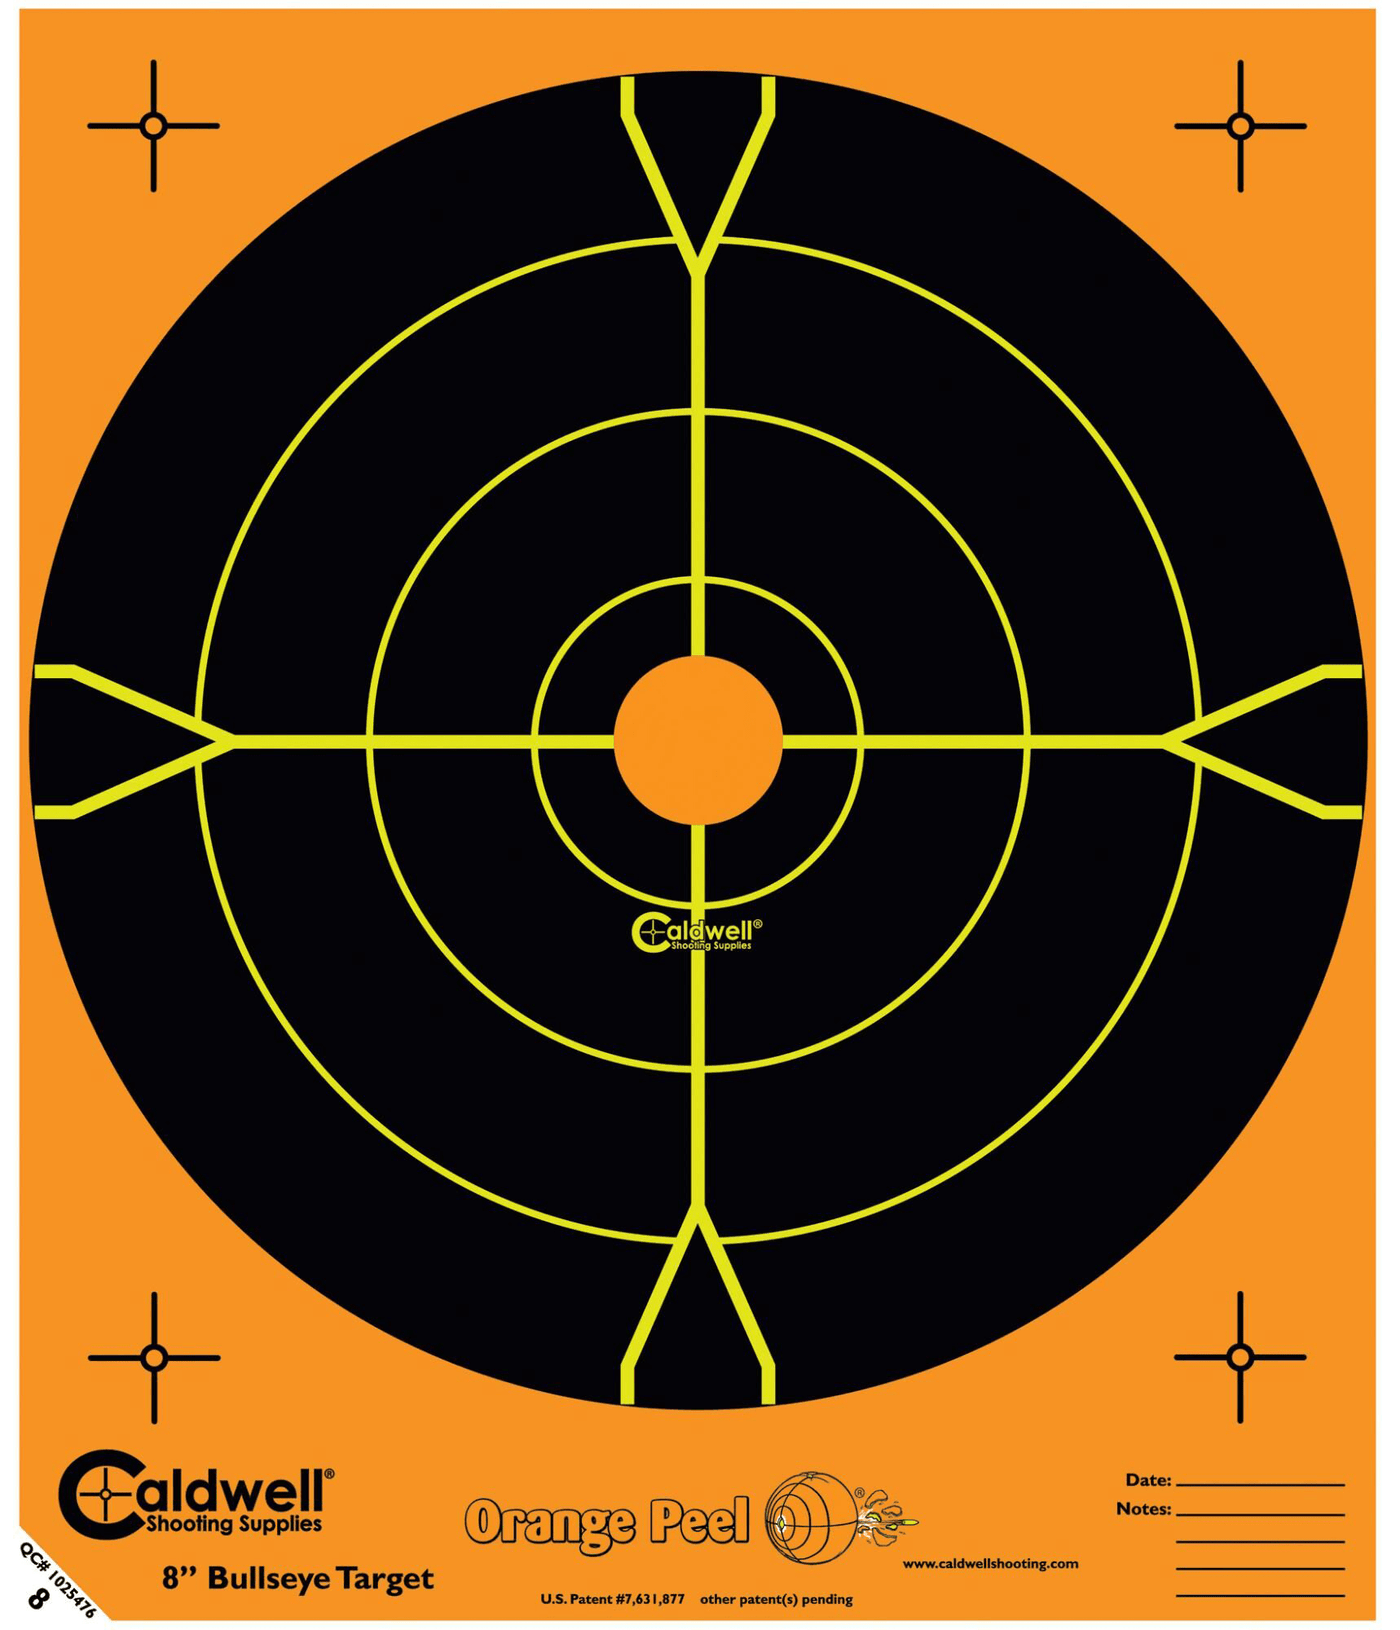 Caldwell Caldwell Orange Peel, Cald 555050   5in  Op Bulls-eye    50pk Shooting